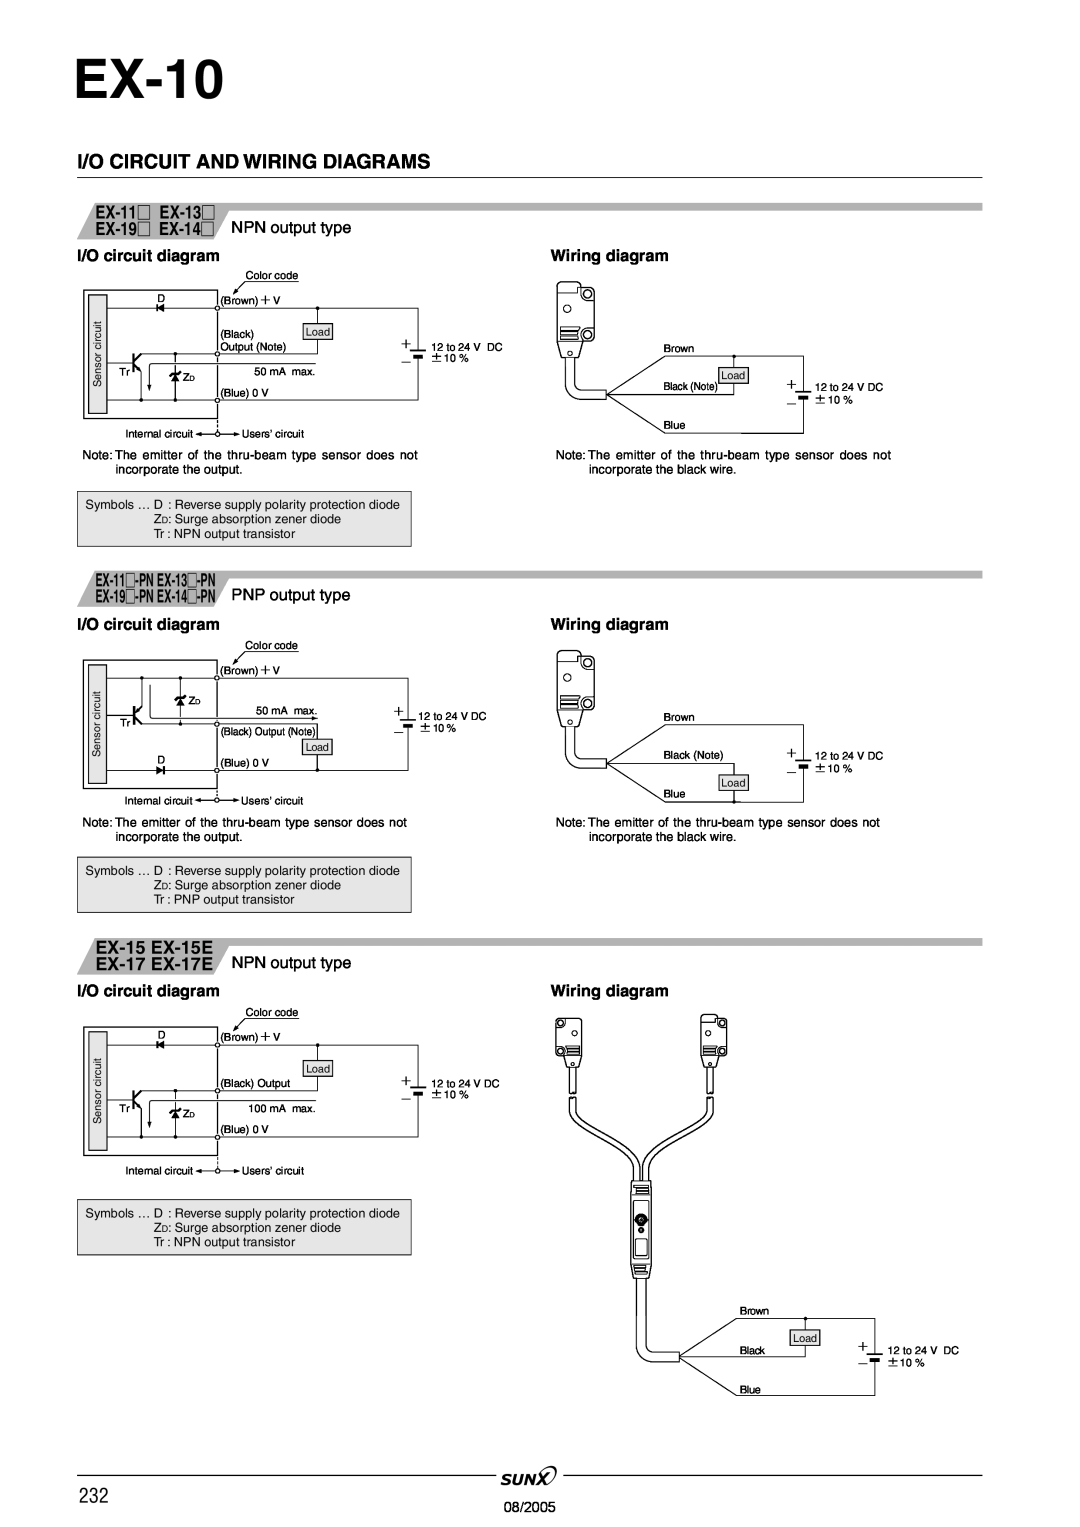 Panasonic EX-10 Series manual I/O Circuit And Wiring Diagrams, EX-11 EX-13, EX-15 EX-15E, EX-19 EX-14 NPN output type 